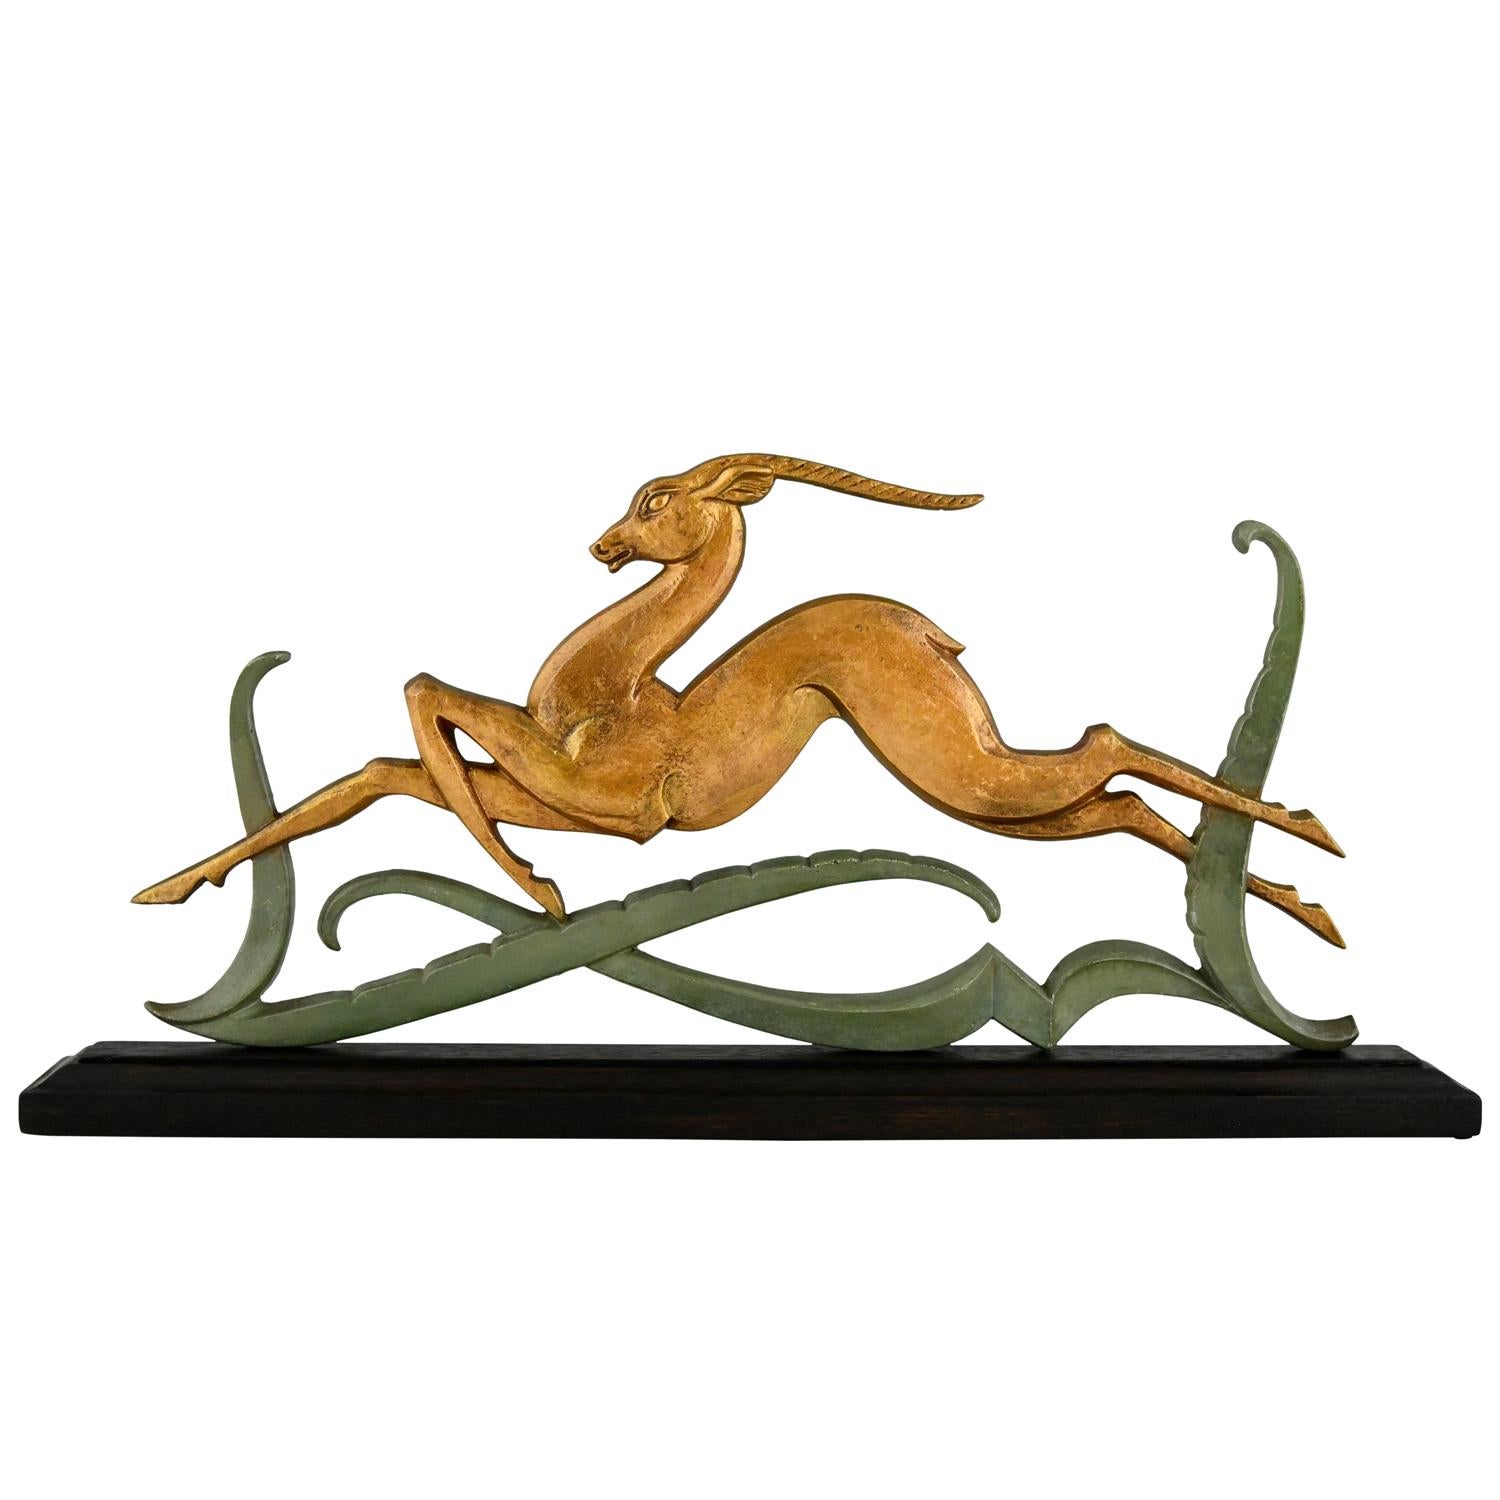 Art Deco Sculpture Leaping Deer, France, 1930